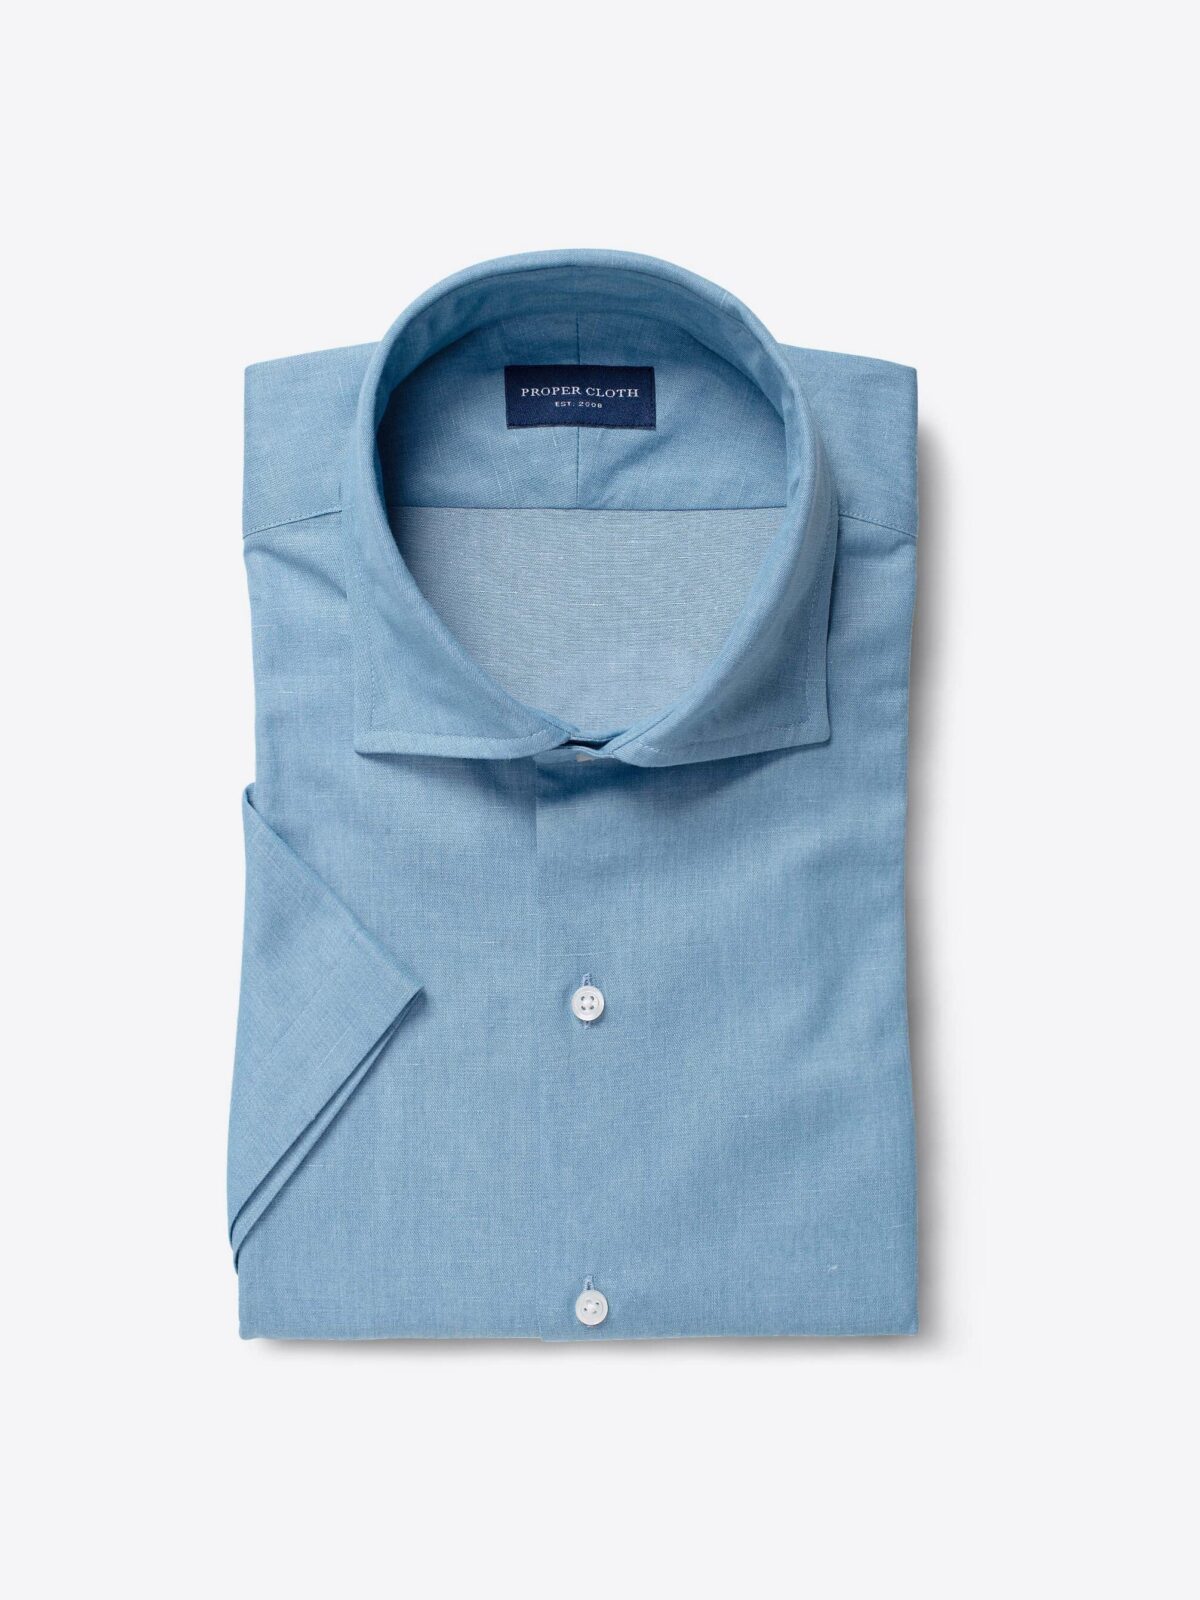 Washed Light Blue Linen Shirt by Proper Cloth